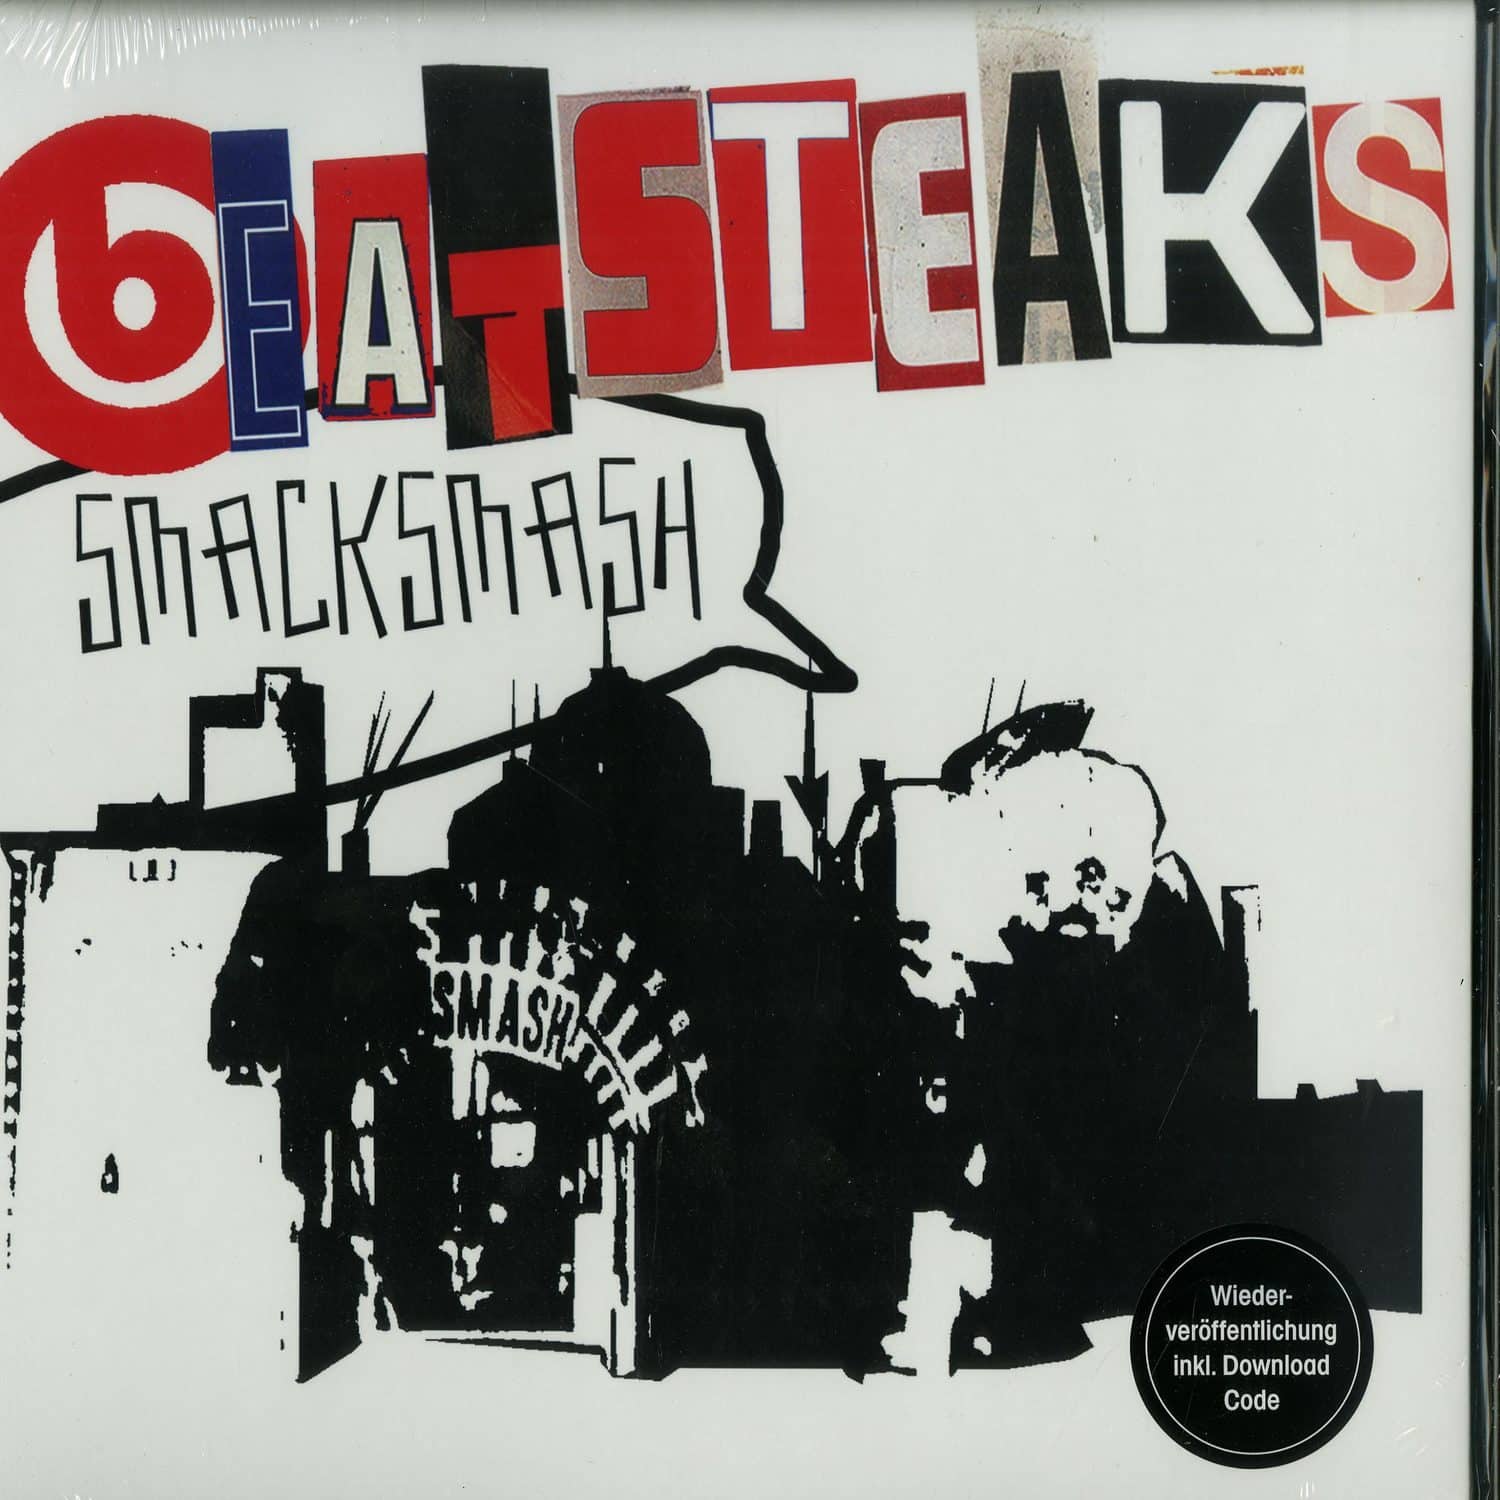 Beatsteaks - SMACKSMASH 